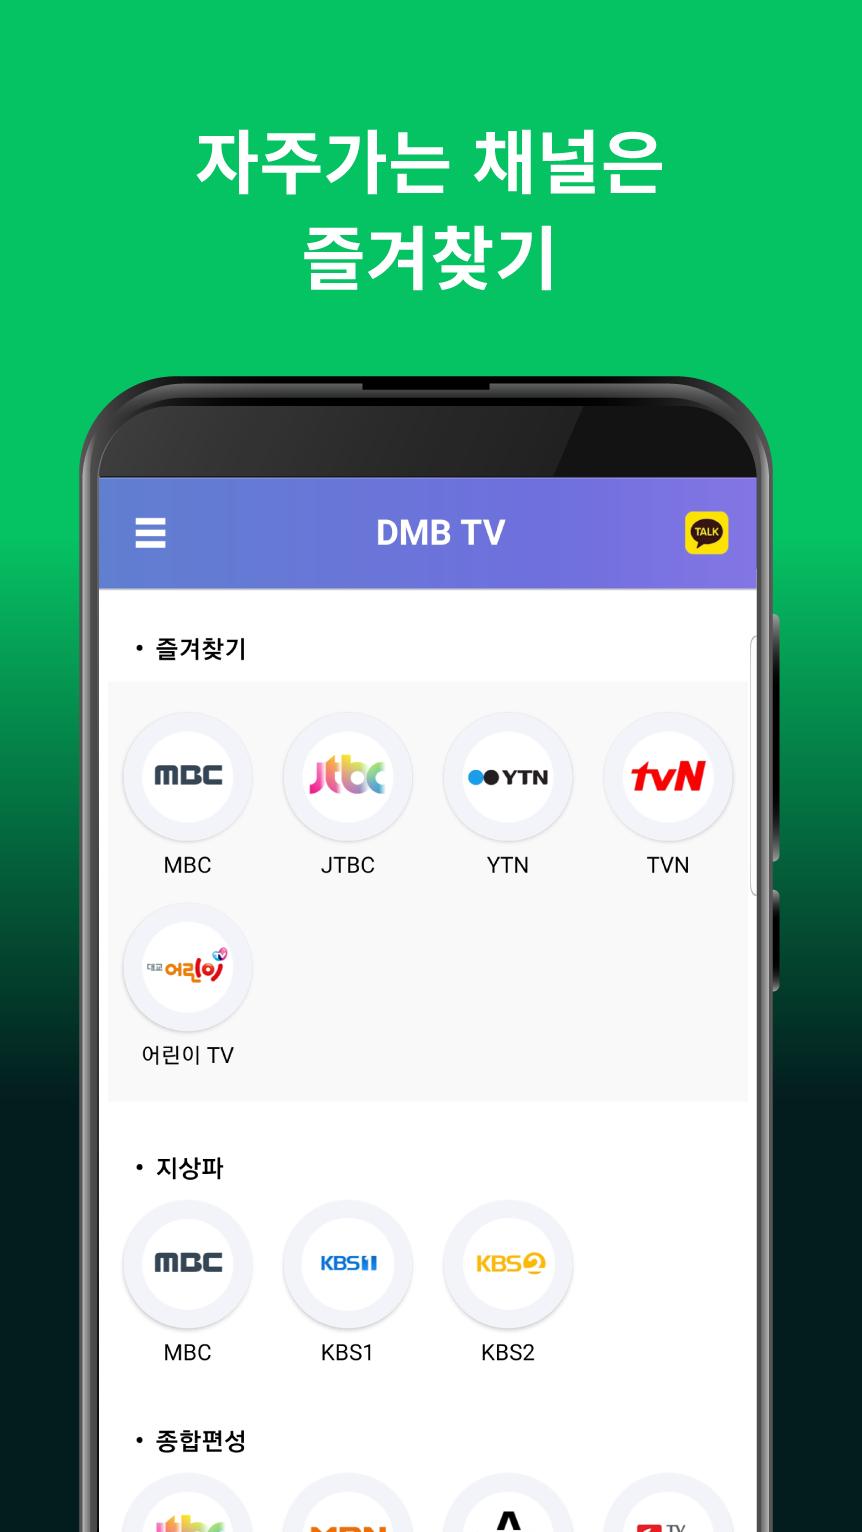 DMB TV 실시간무료TV, 실시간TV 방송, 지상파, 디엠비 방송시청, 모바일 무료티비 1.0.1 Screenshot 3